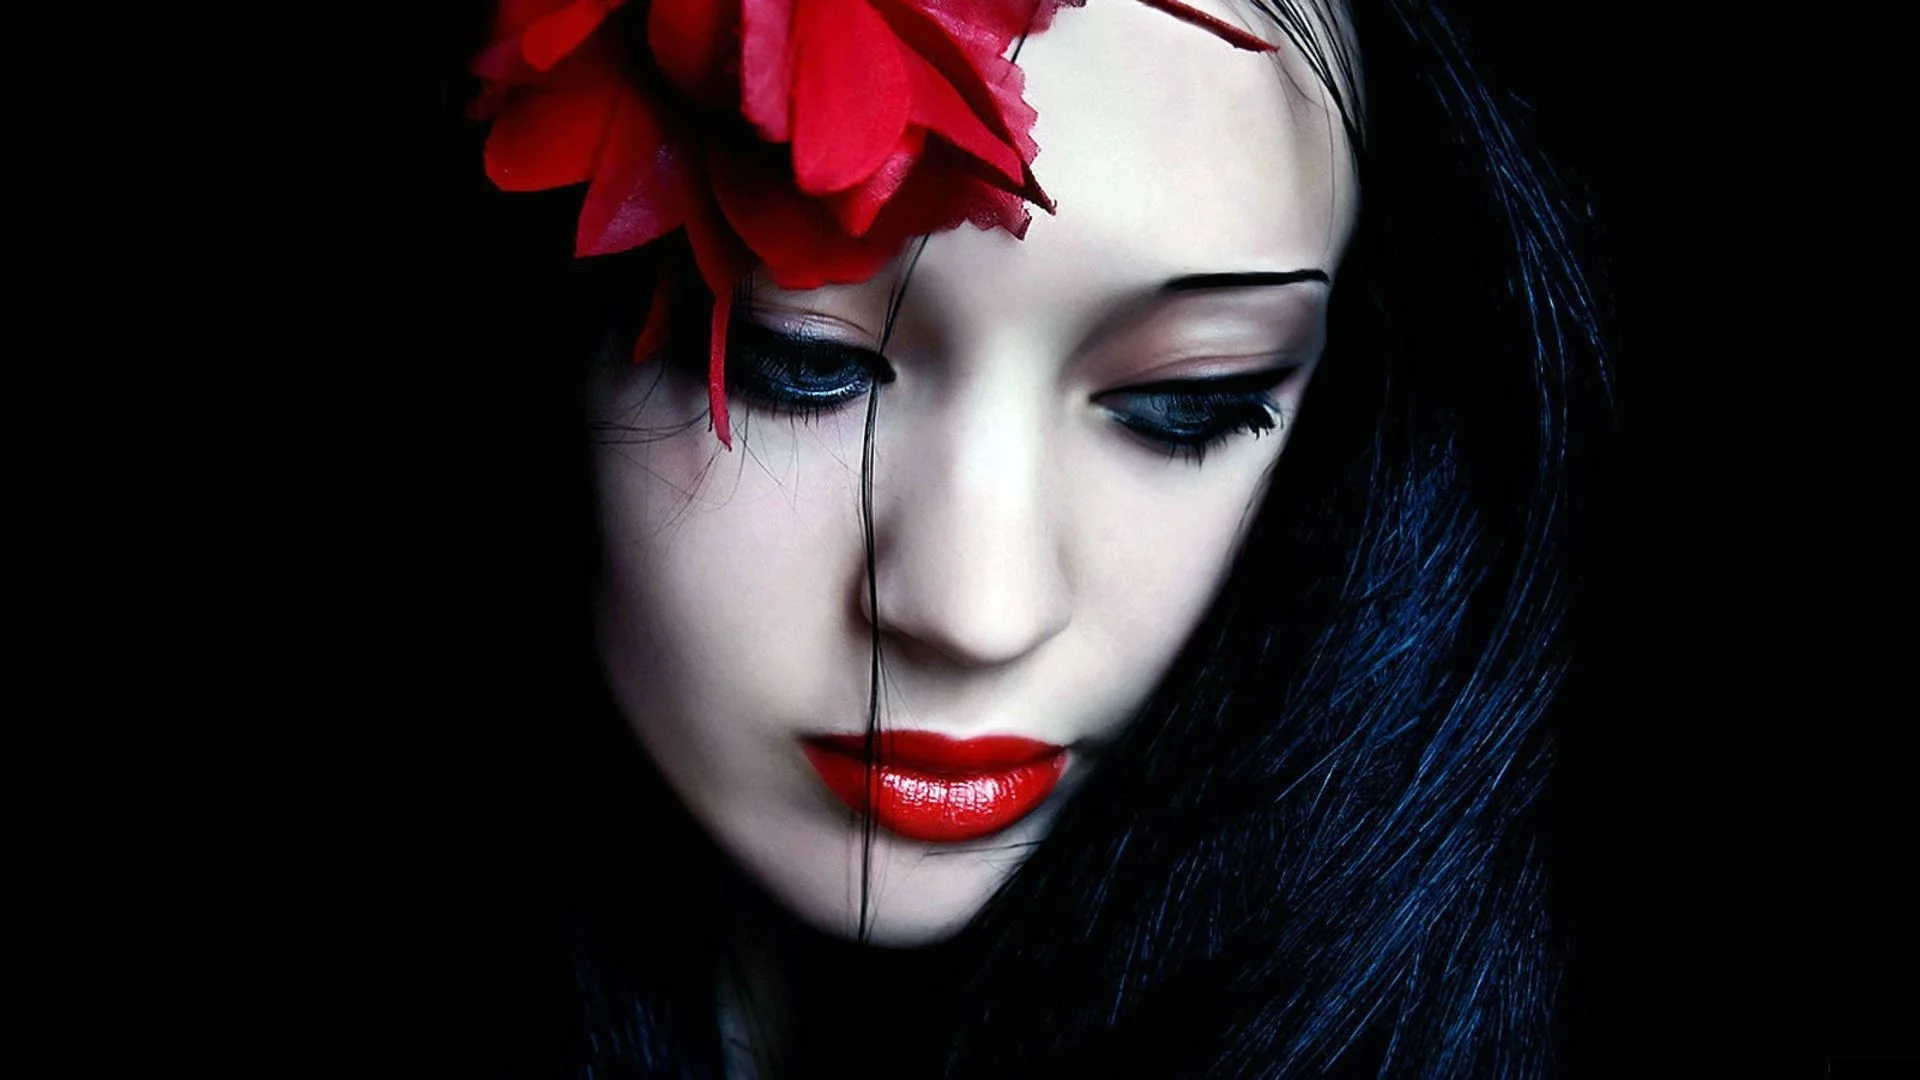 Women females girls gothic vampire face pale sad sorrow emotions red contrast dark wallpaper 24010 WallpaperUP